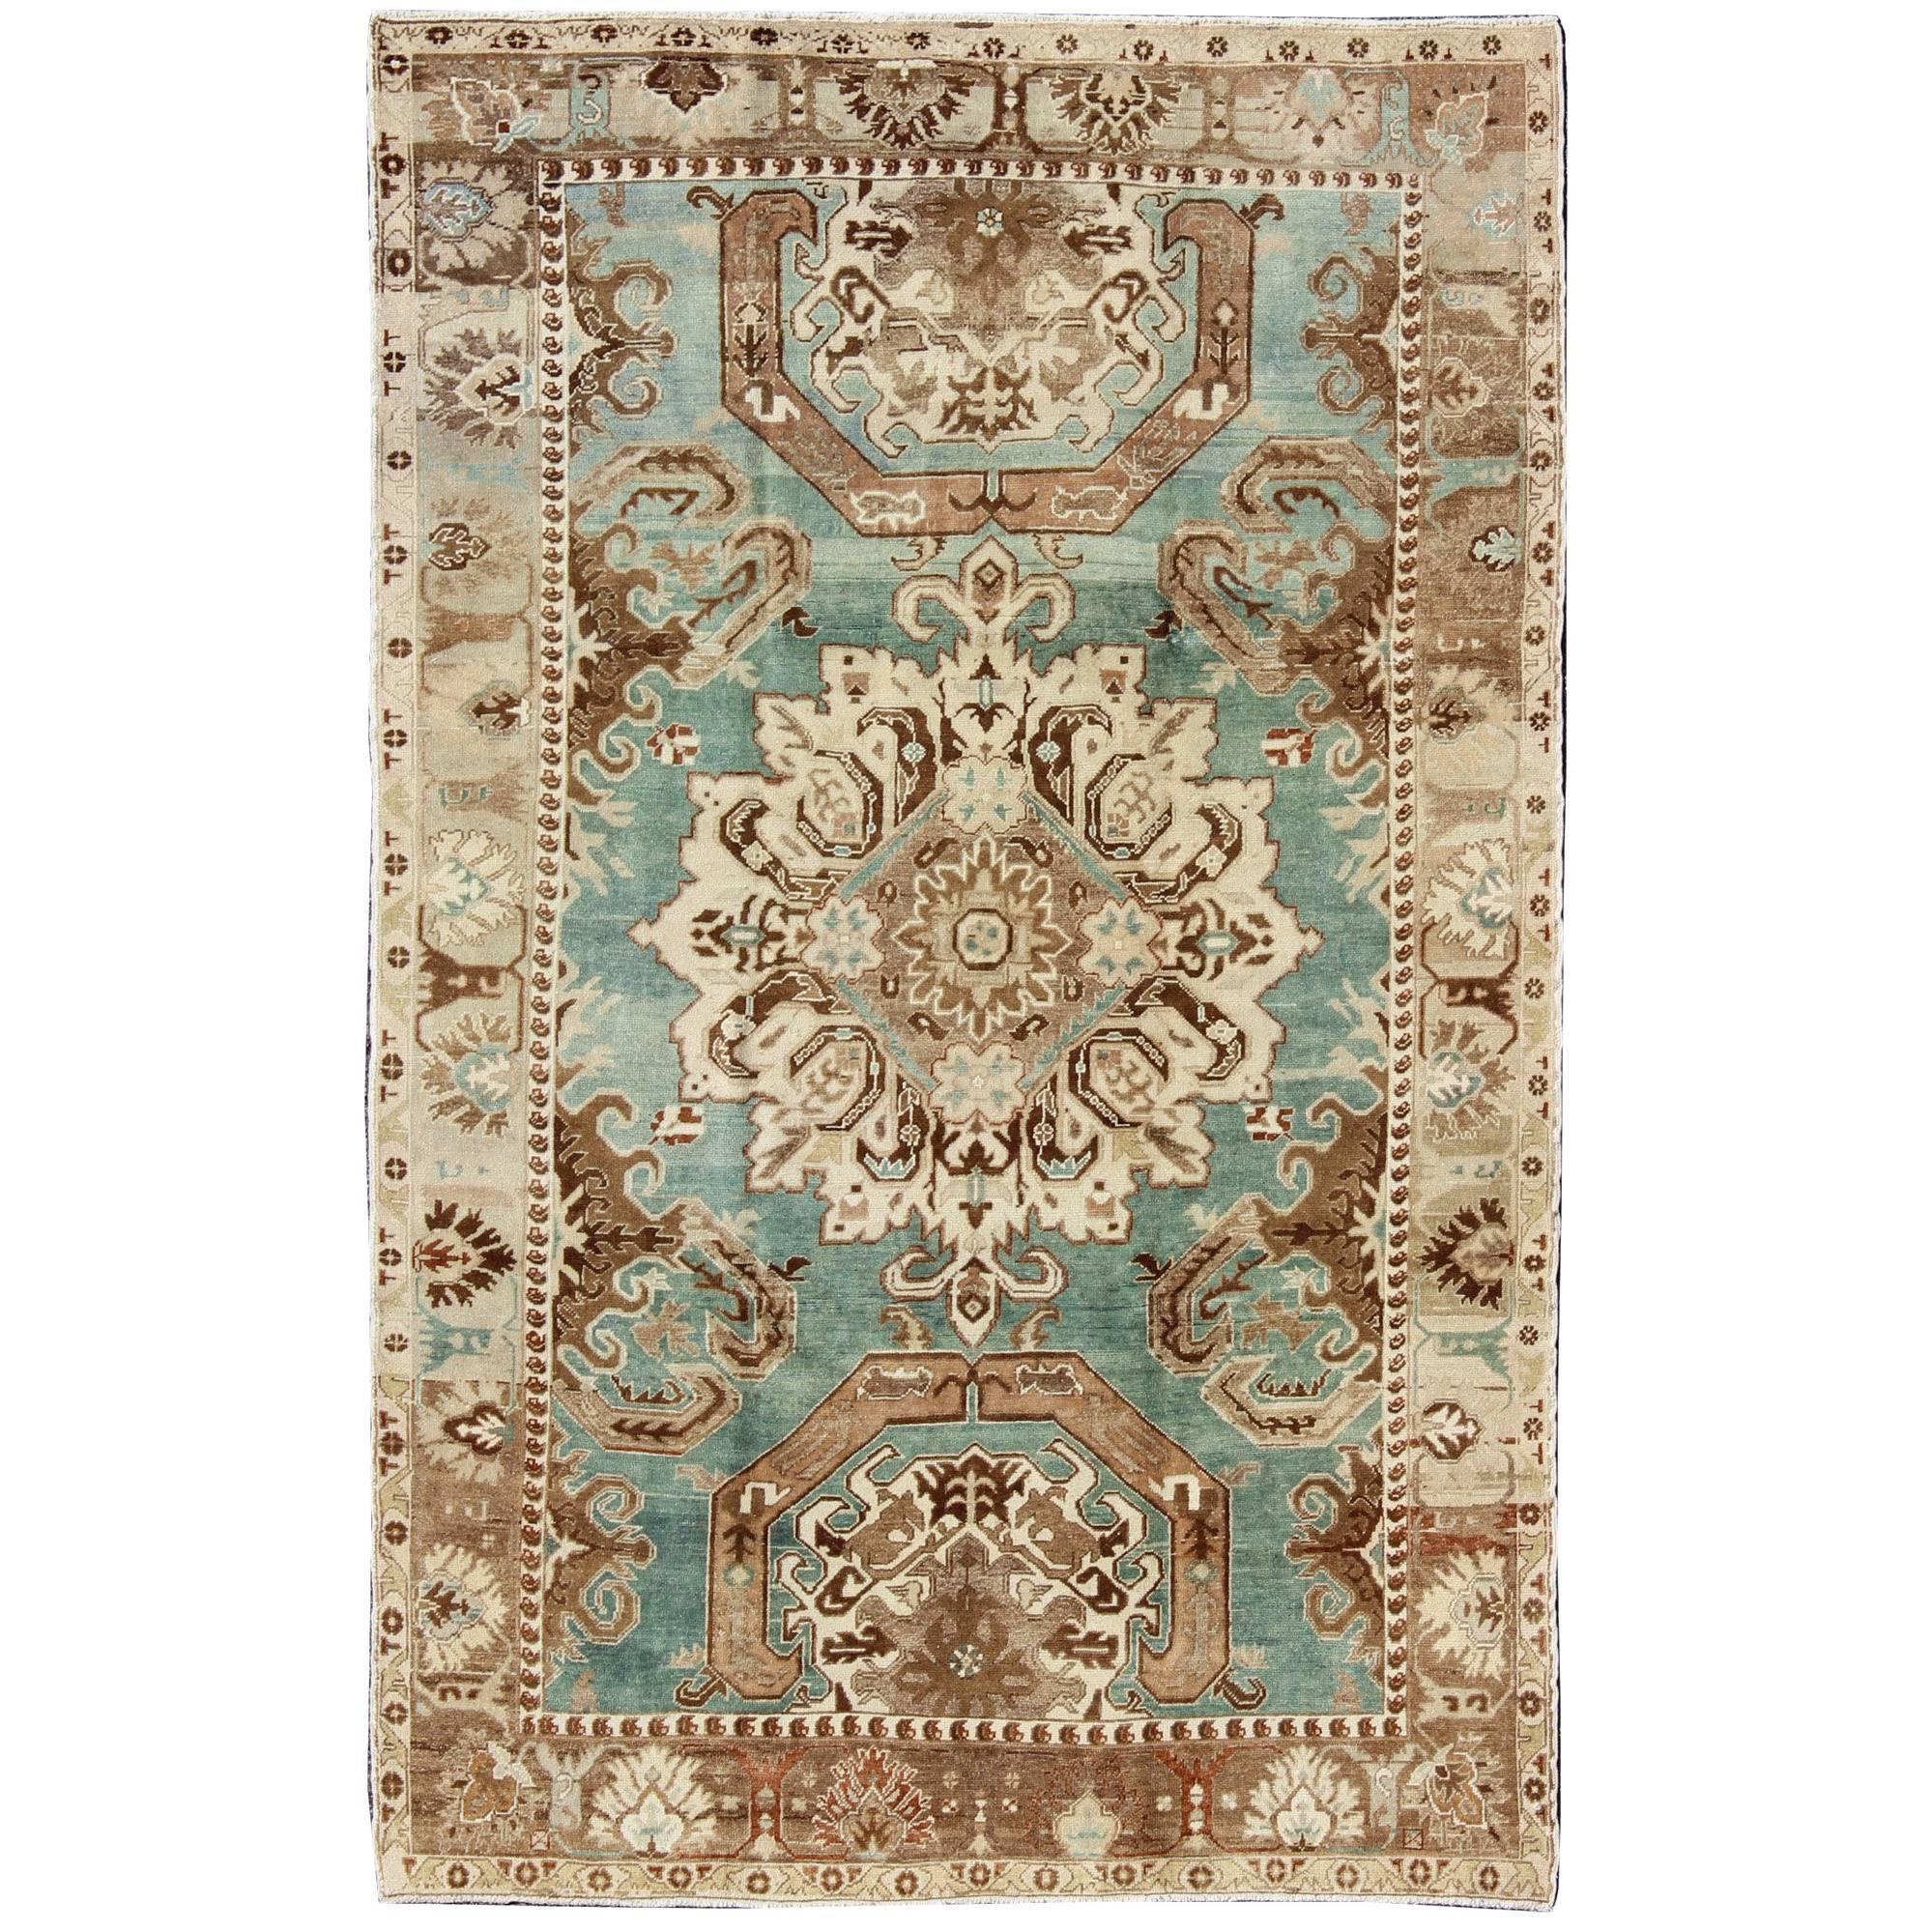 Unique Vintage Turkish Carpet with Geometric Design Inspired by Caucasian Design